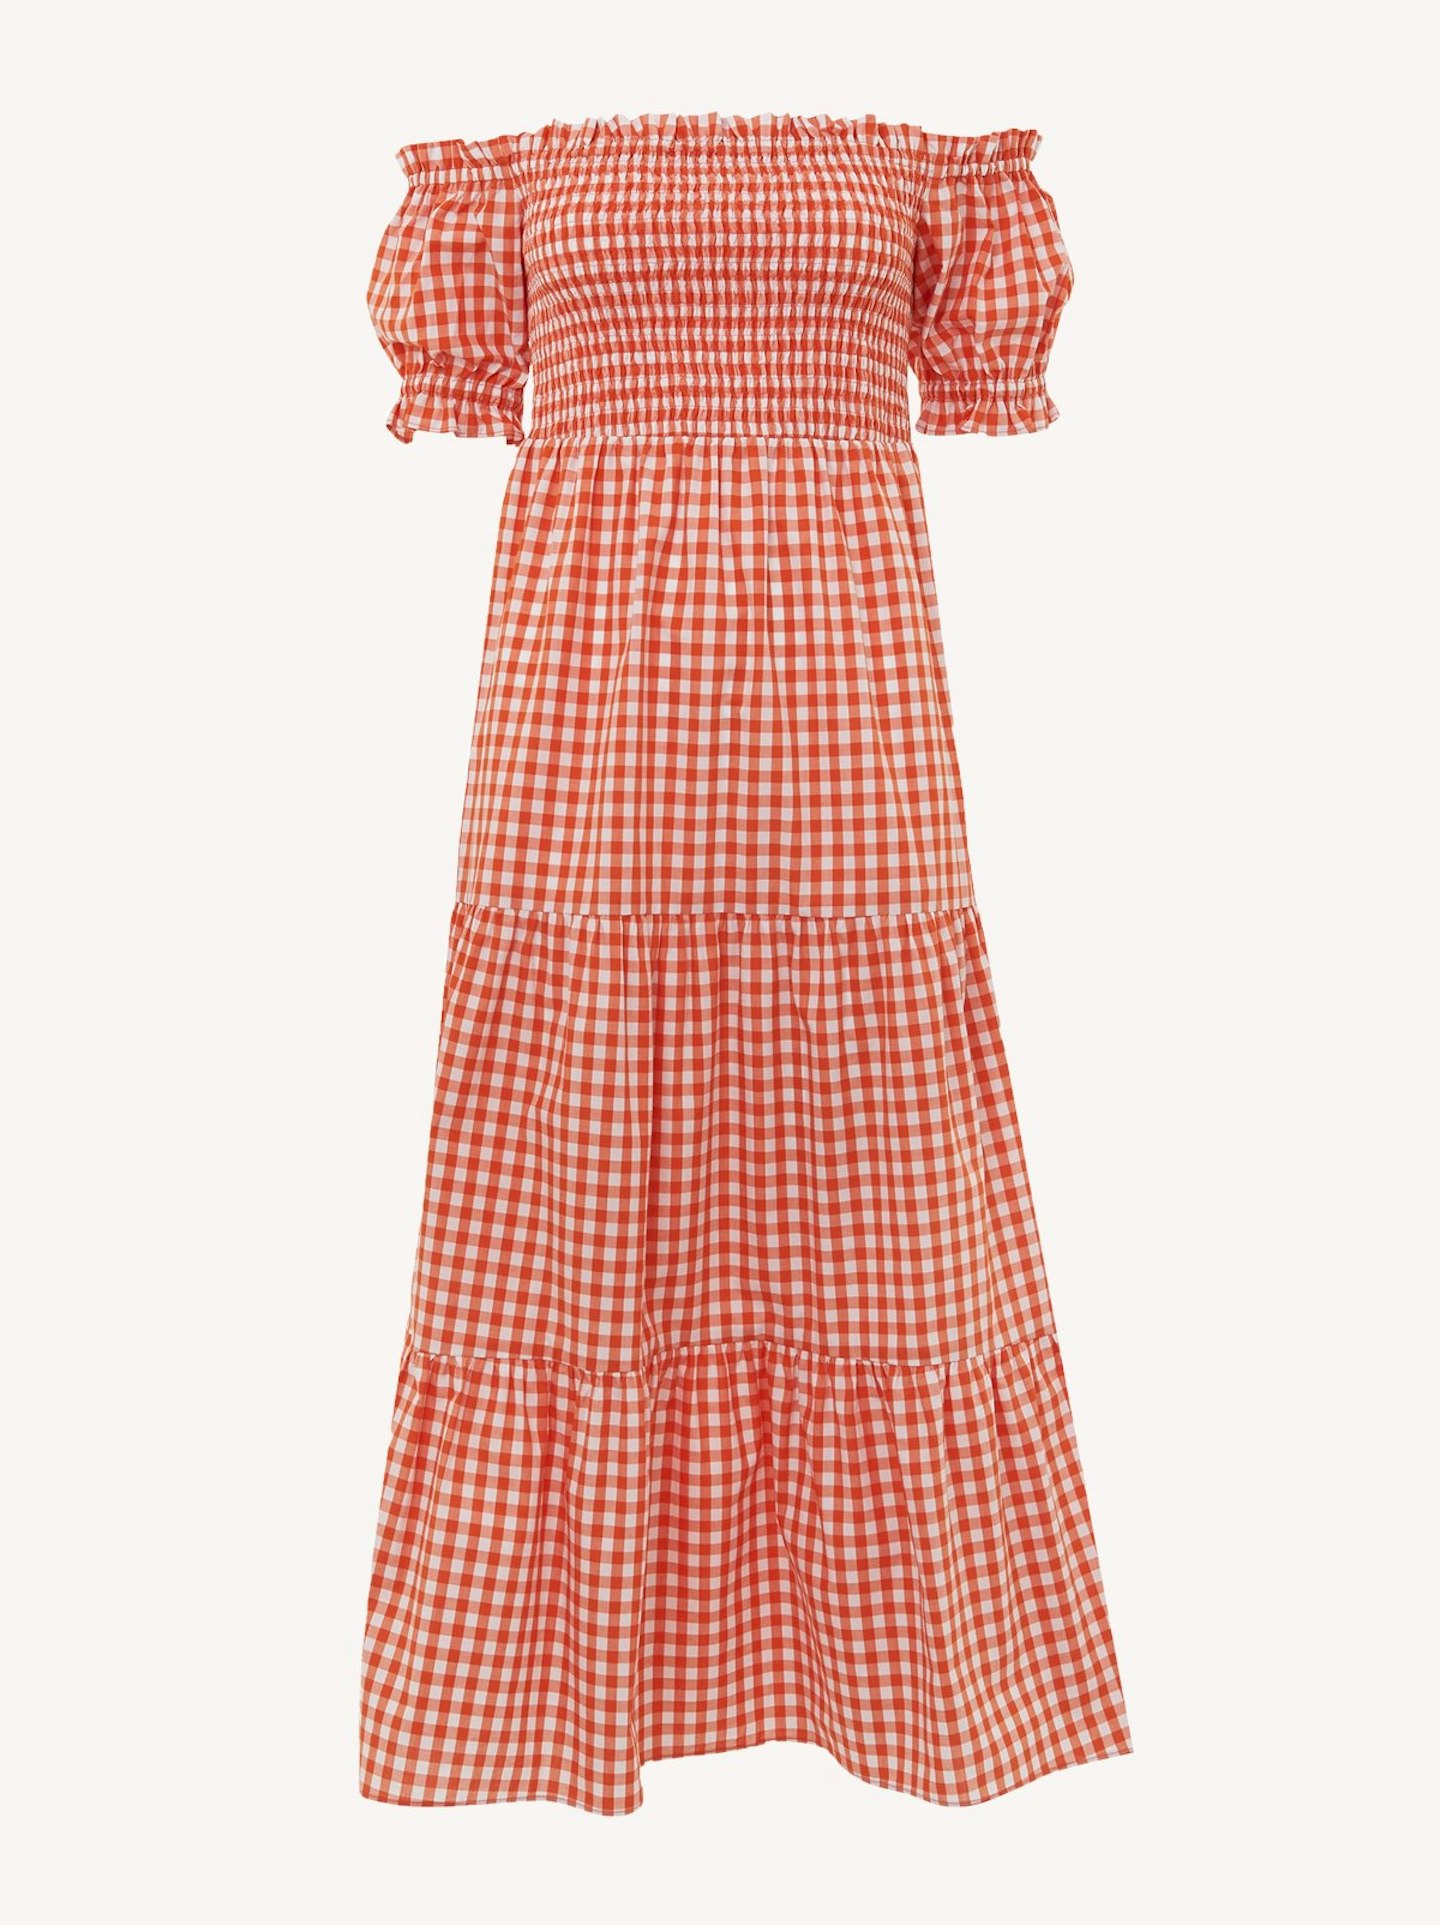 Alma Gingham Smocked Dress, £145